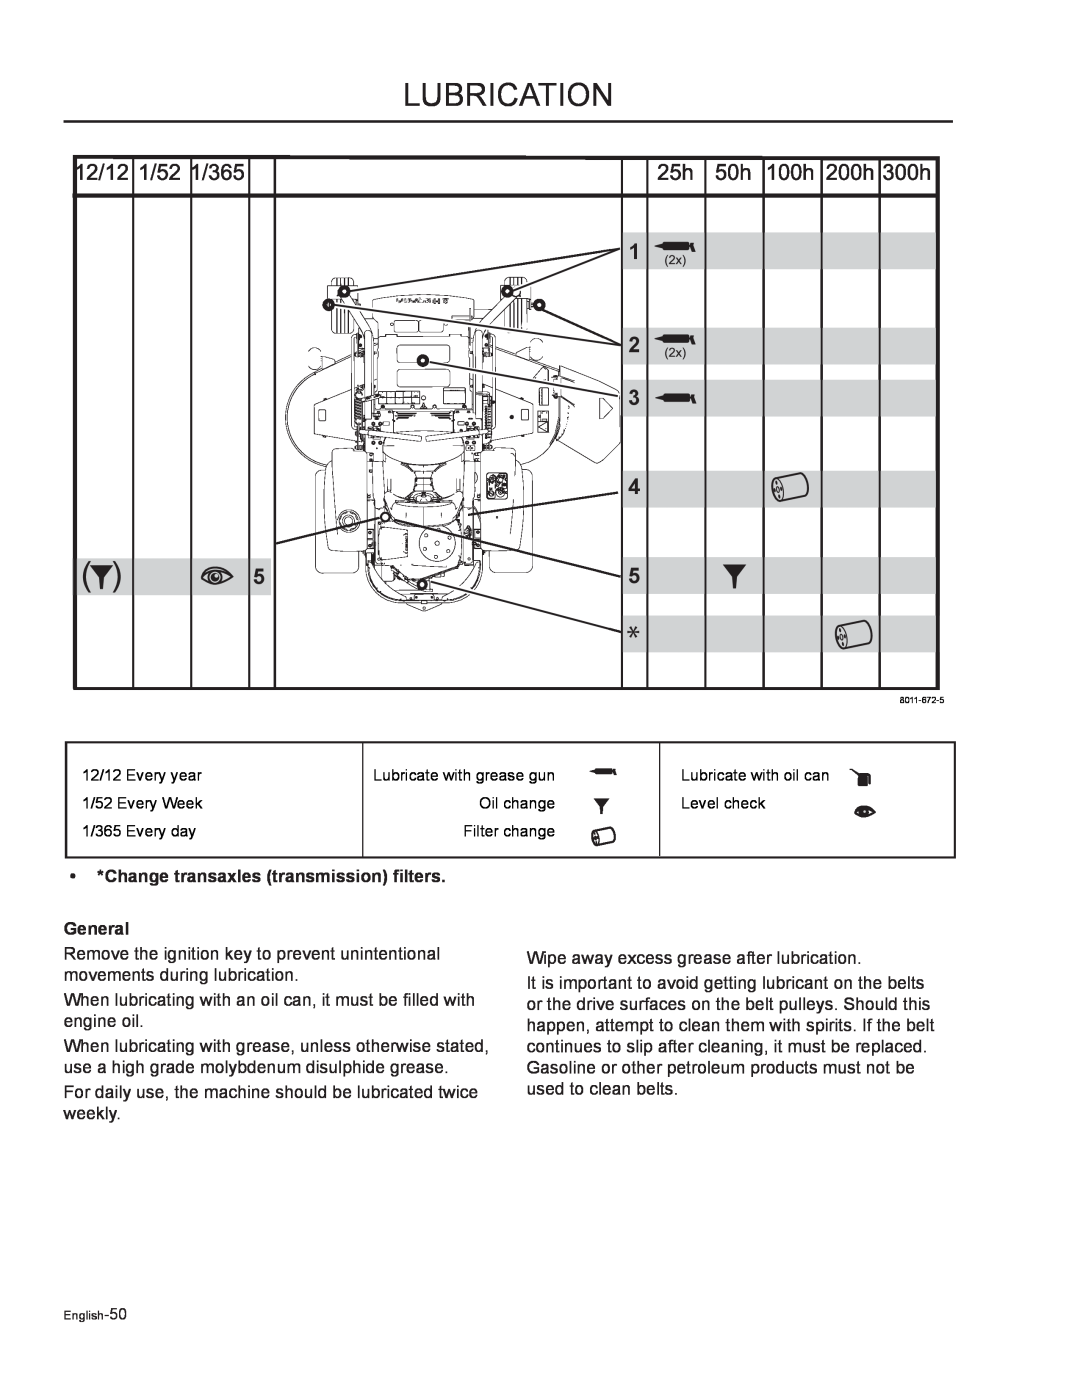 Husqvarna MZ5225C / 968999748, MZ6125C / 968999749 manual Change transaxles transmission filters, General, Lubrication 